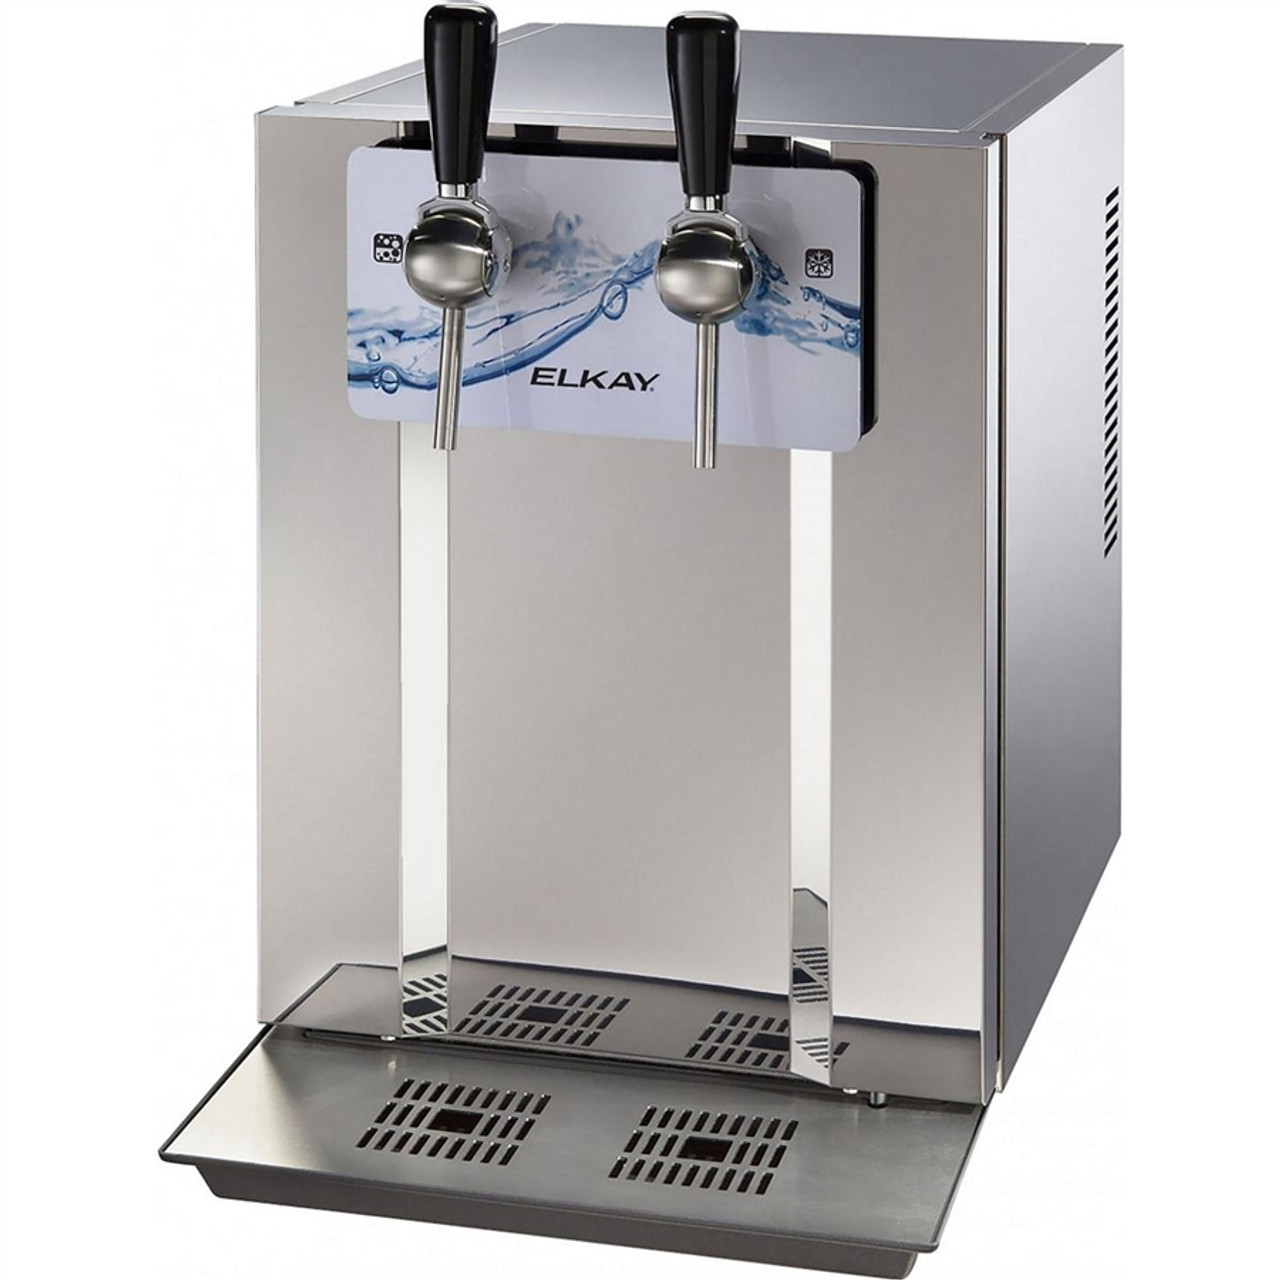 Elkay DSFCF180UVK Fontemagna Compact Countertop Water Dispenser